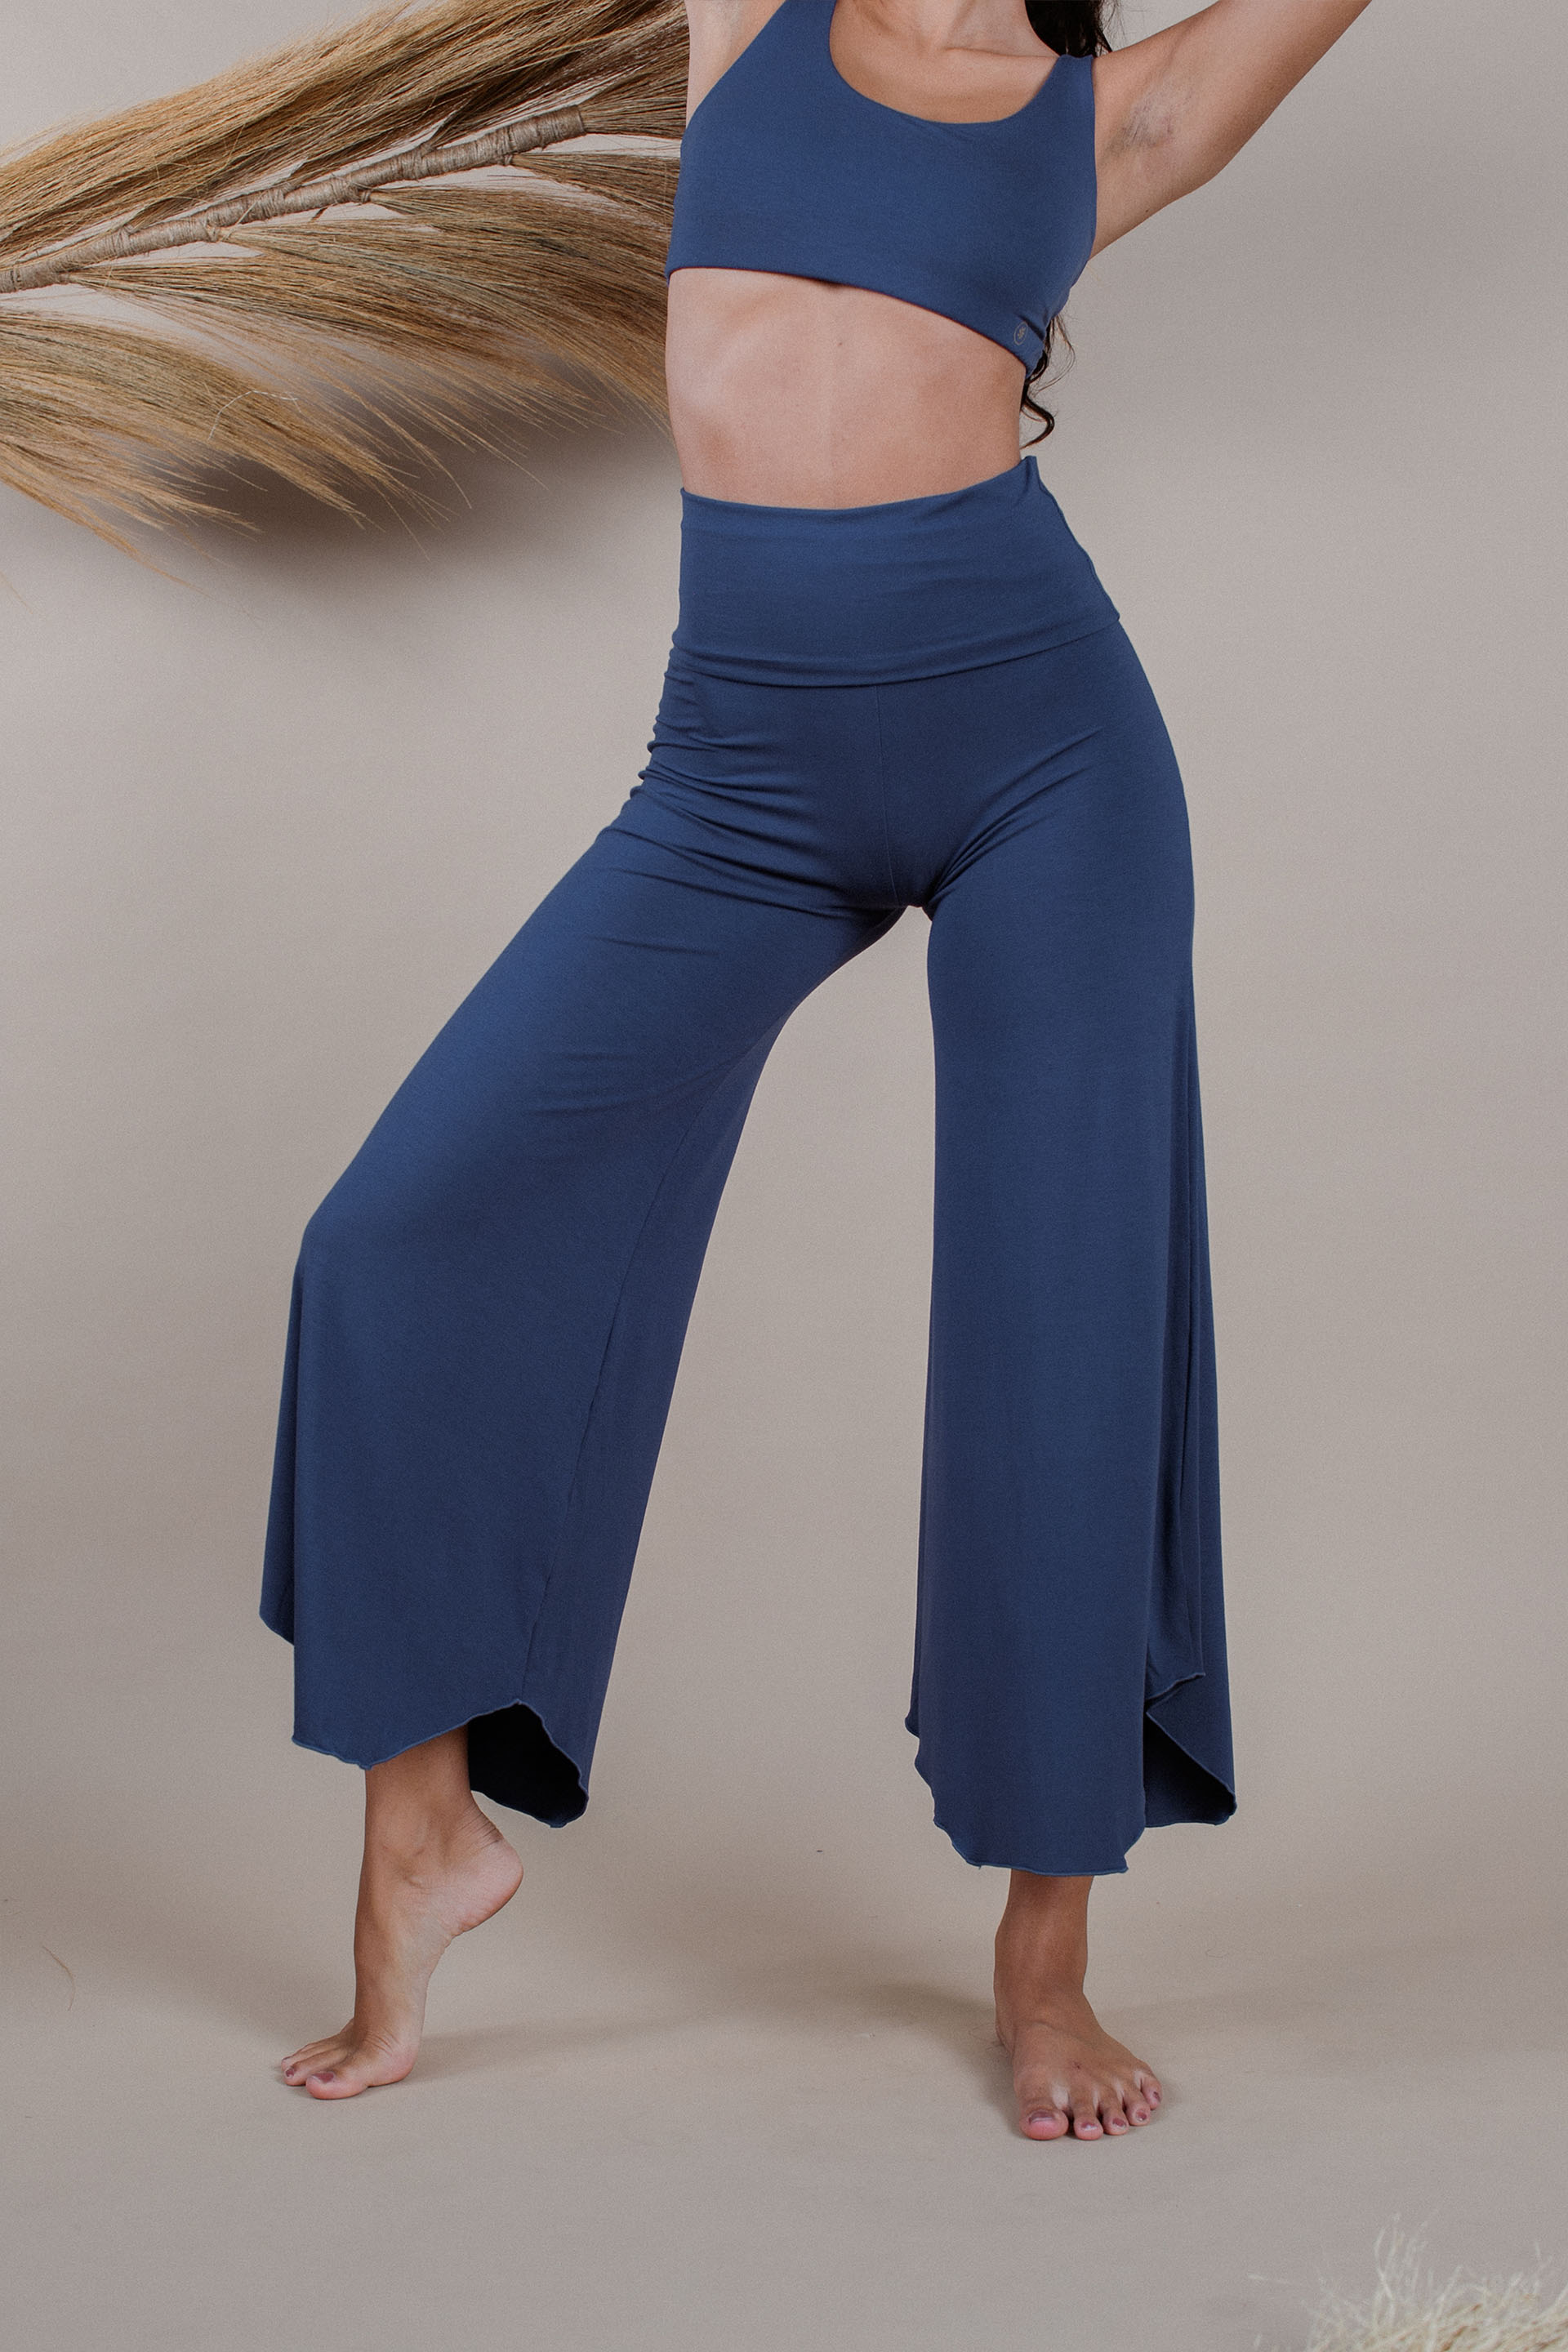 Flared Bottom Yoga Dance Pants in Caribbean Blue